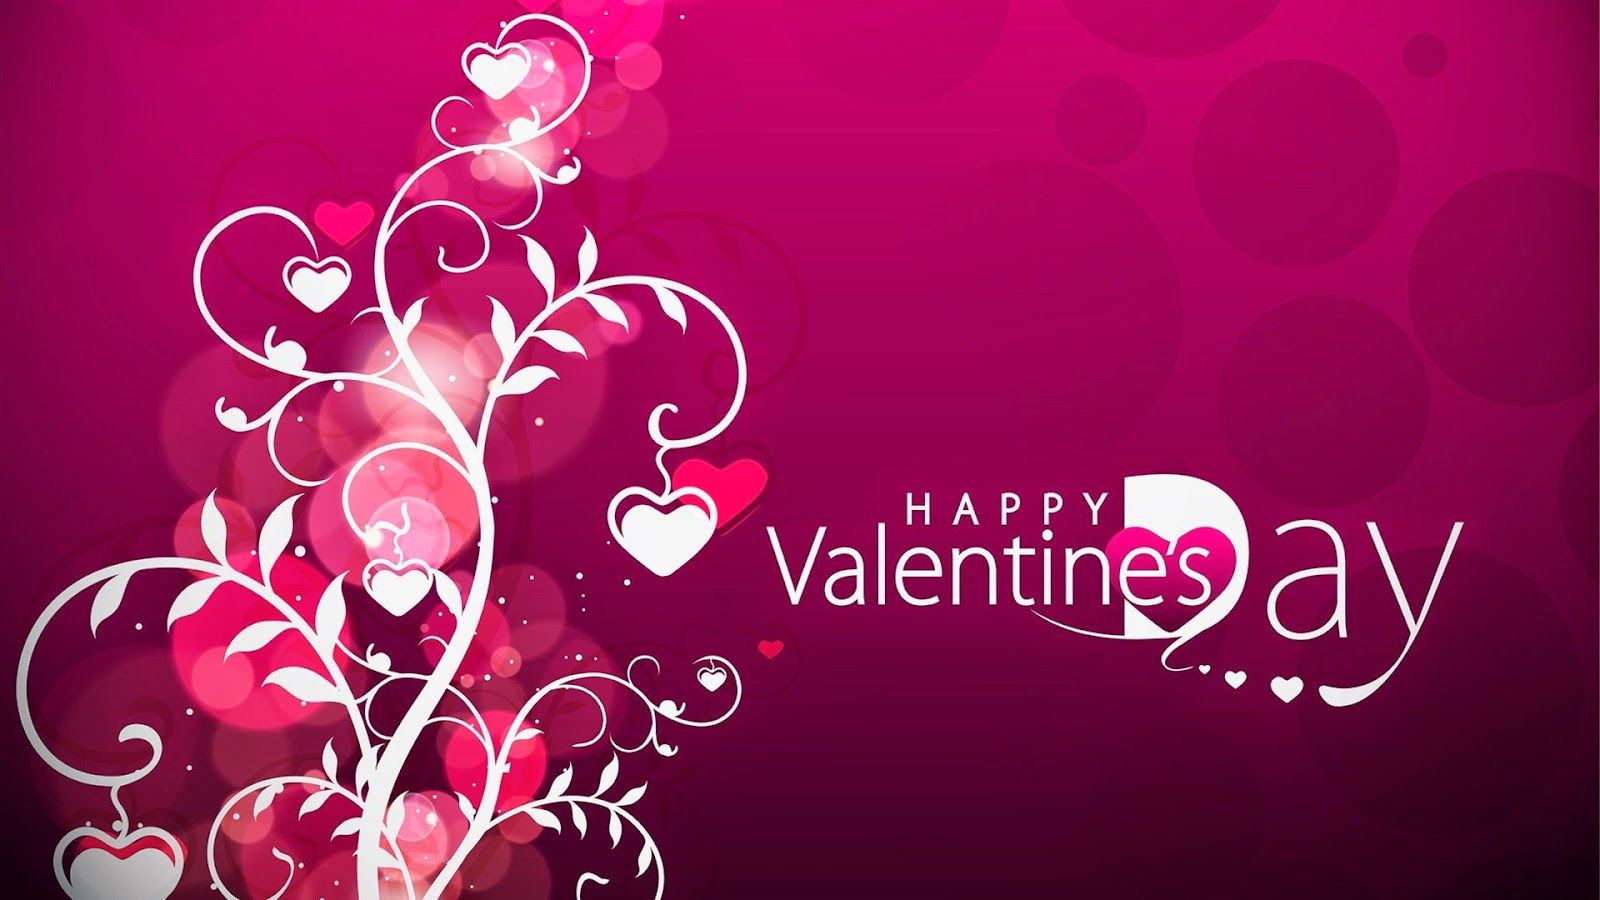 Happy Valentine Day Image Hd - HD Wallpaper 